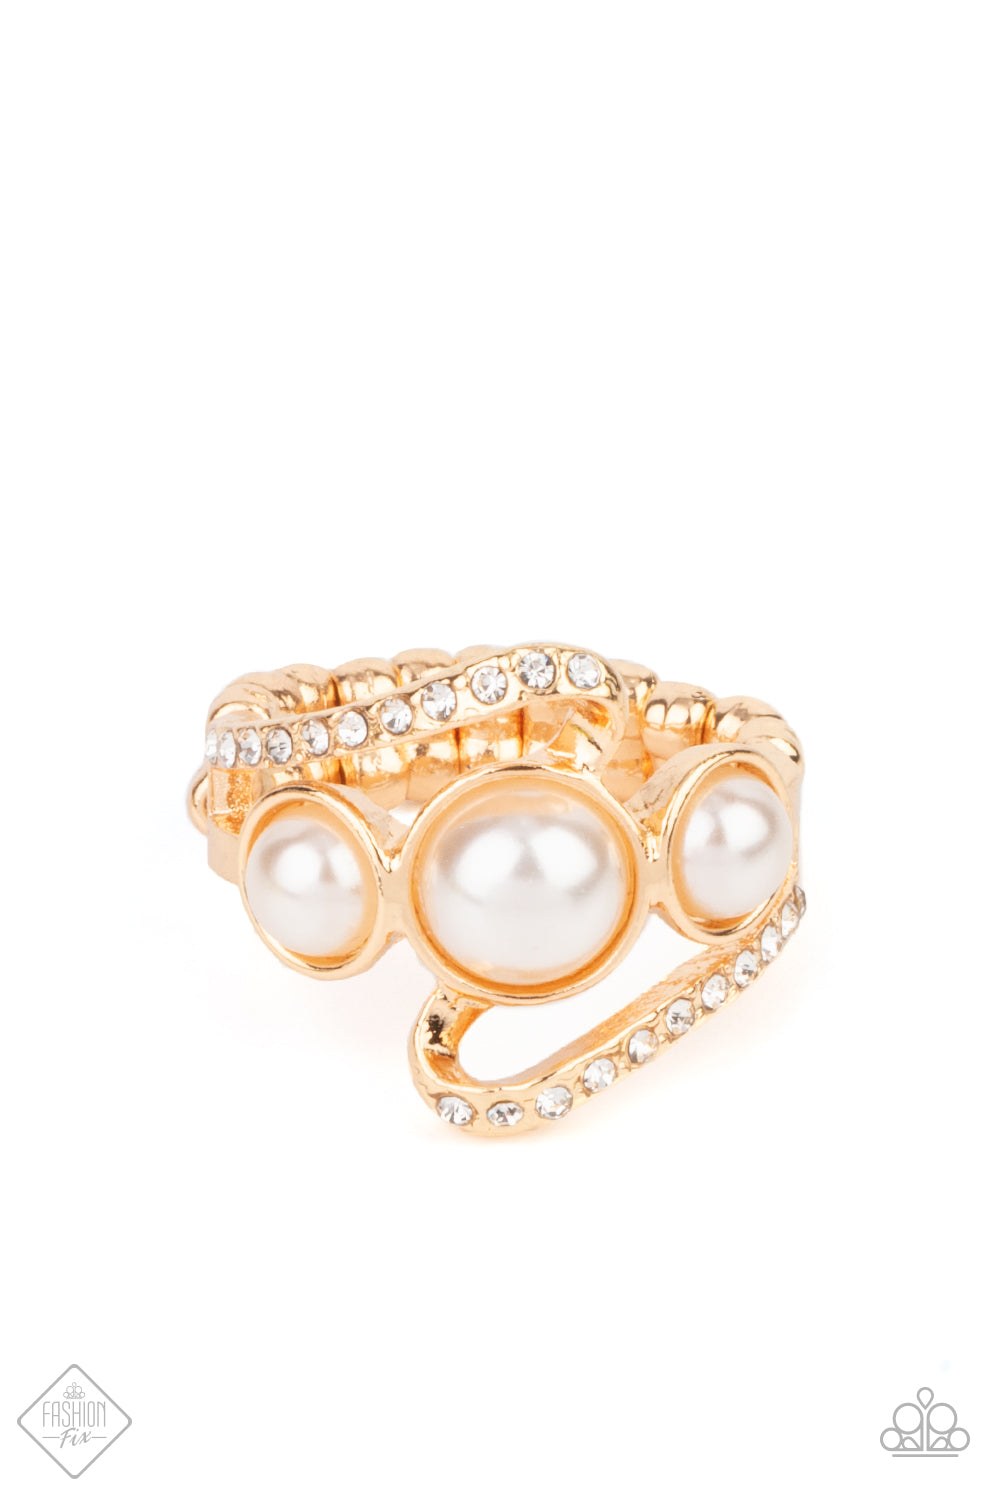 Posh Progression - Gold & White Ring August Fashion Fix Exclusive - Princess Glam Shop